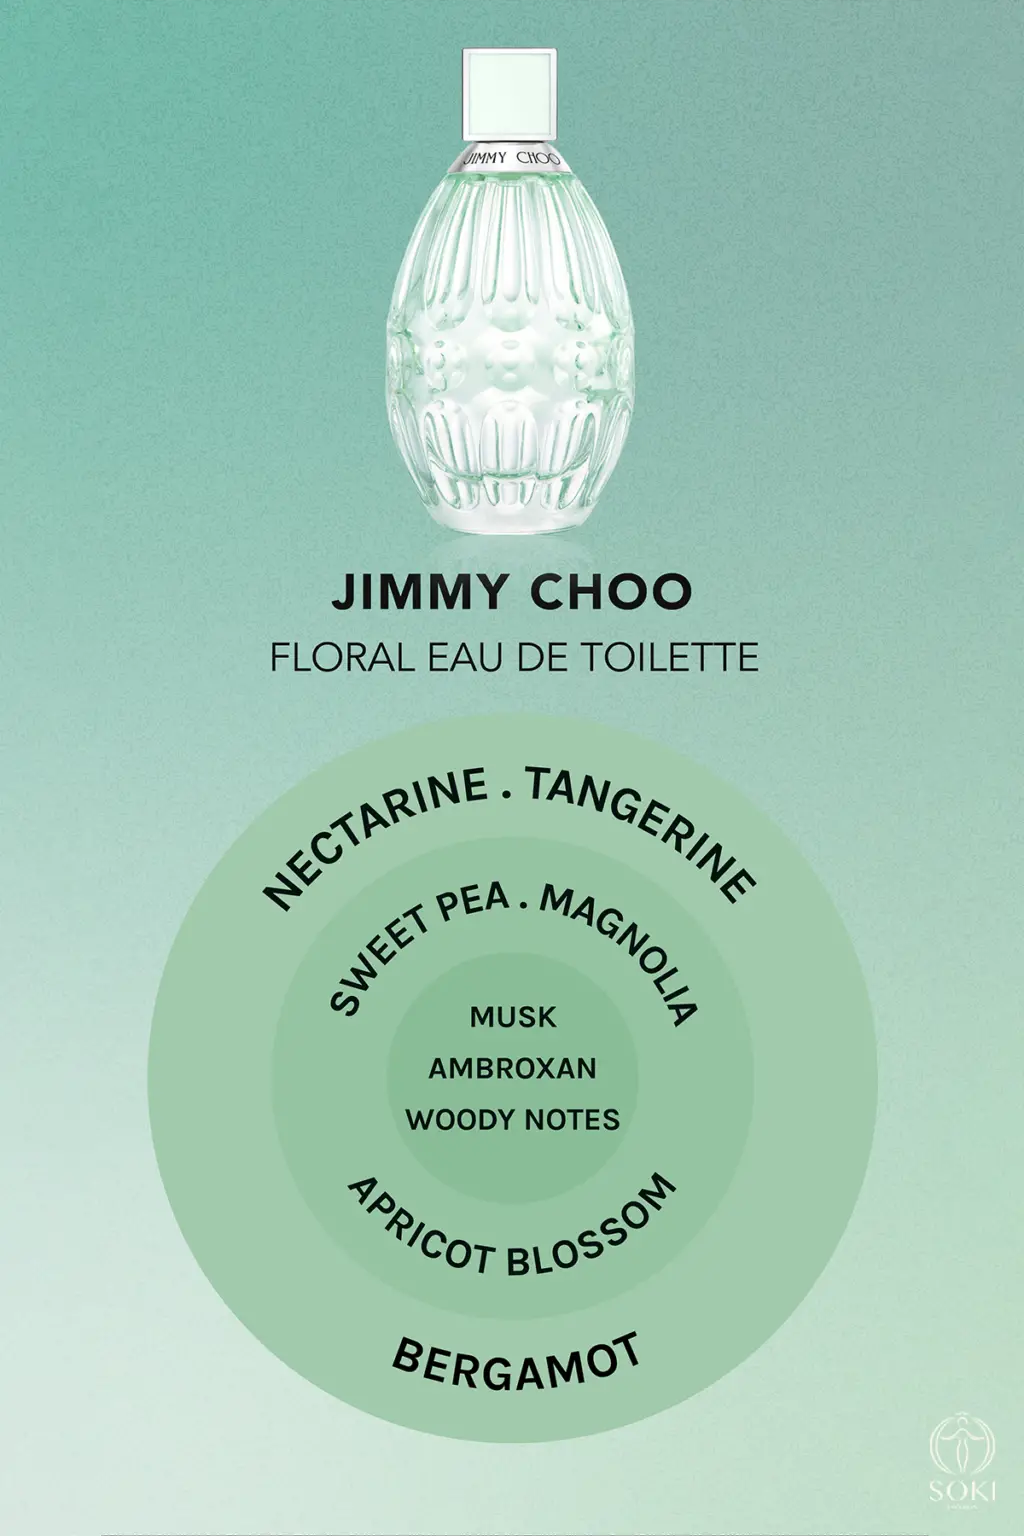 The Ultimate Guide To The Jimmy Choo Perfume Range | SOKI LONDON